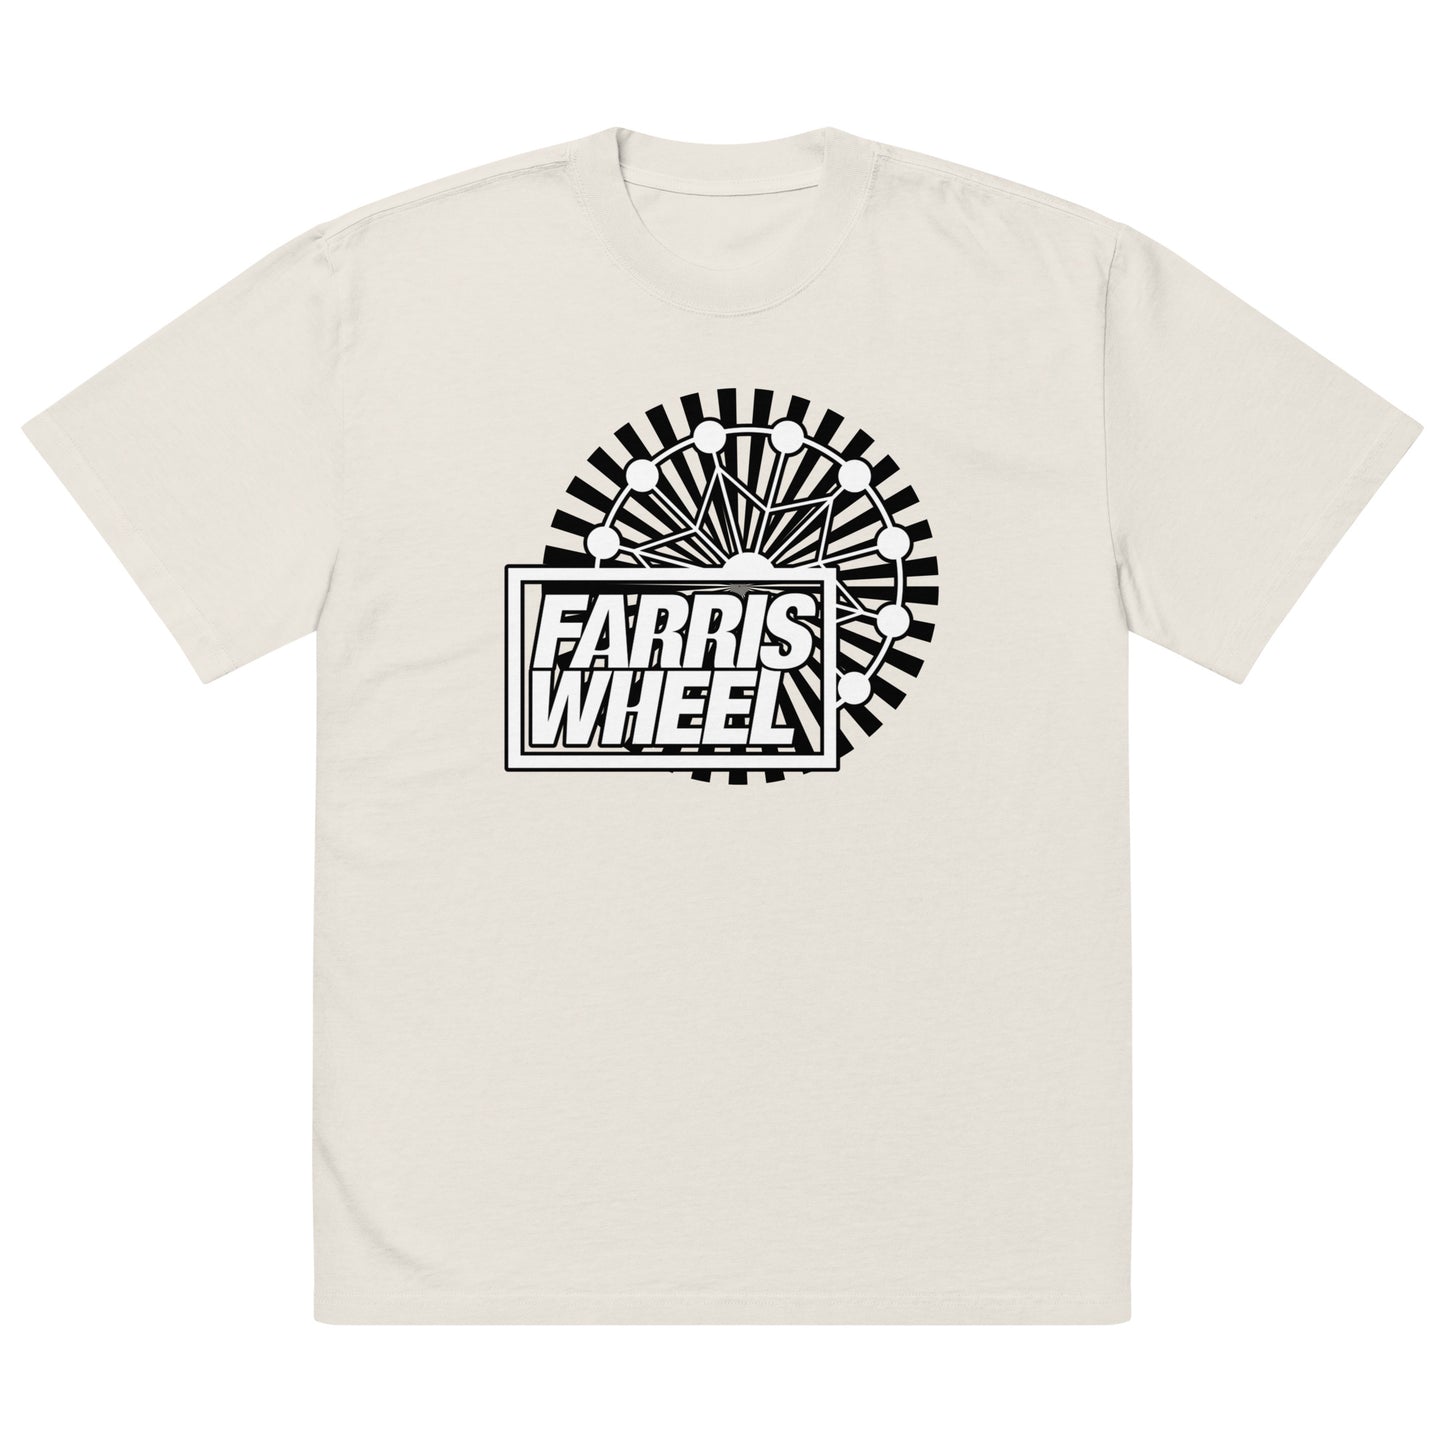 Farris Wheel Oversized Faded T-shirt